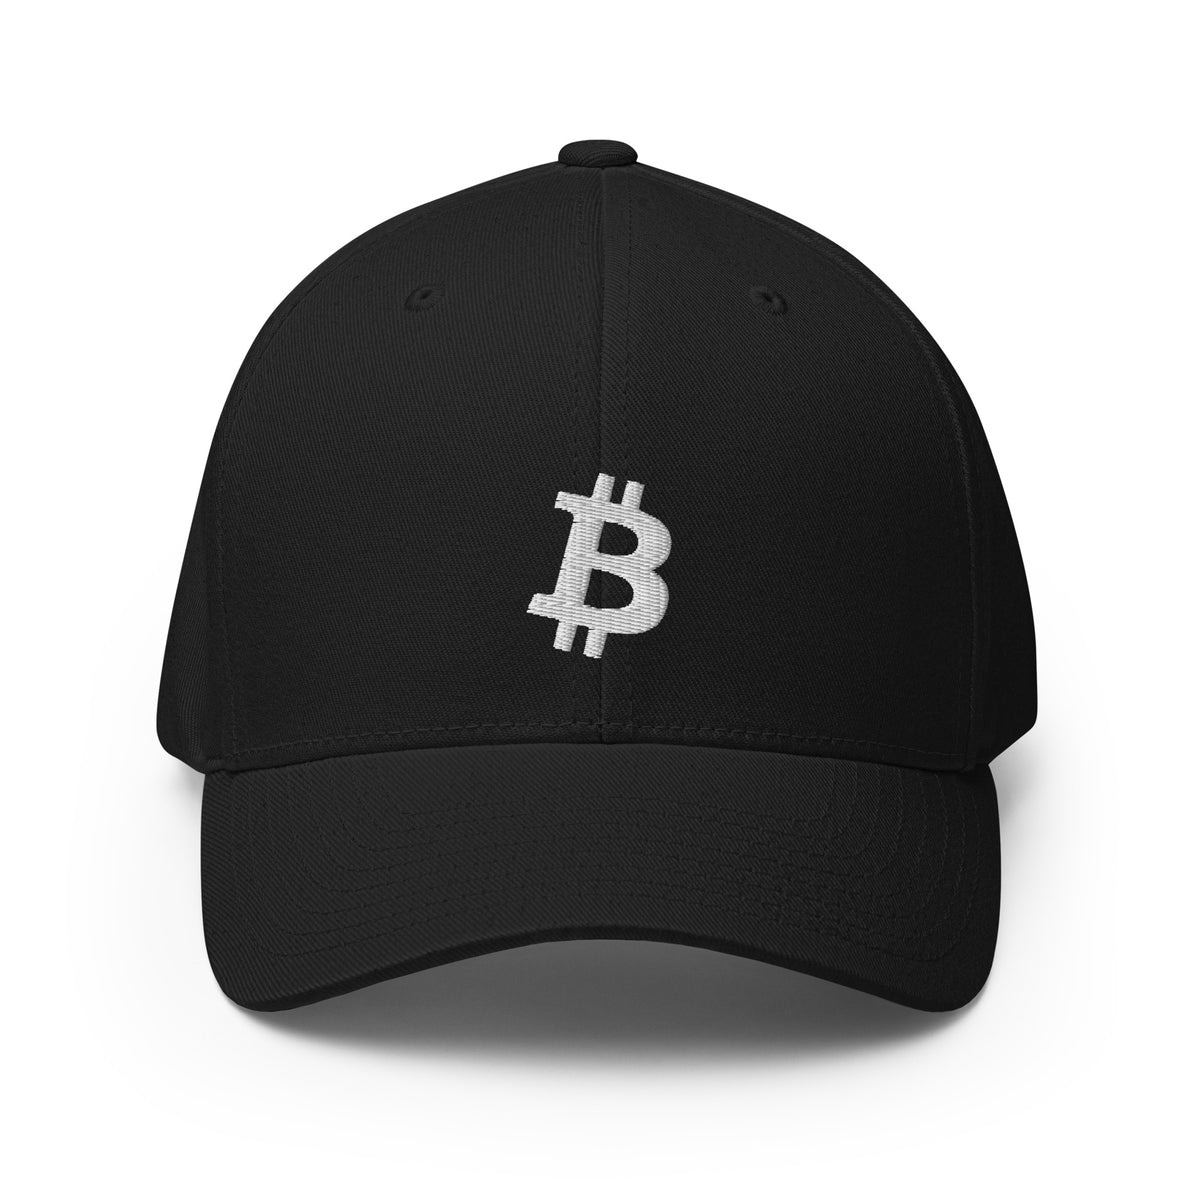 Bitcoin B (White Embroidery) Flexfit Hat - fomo21